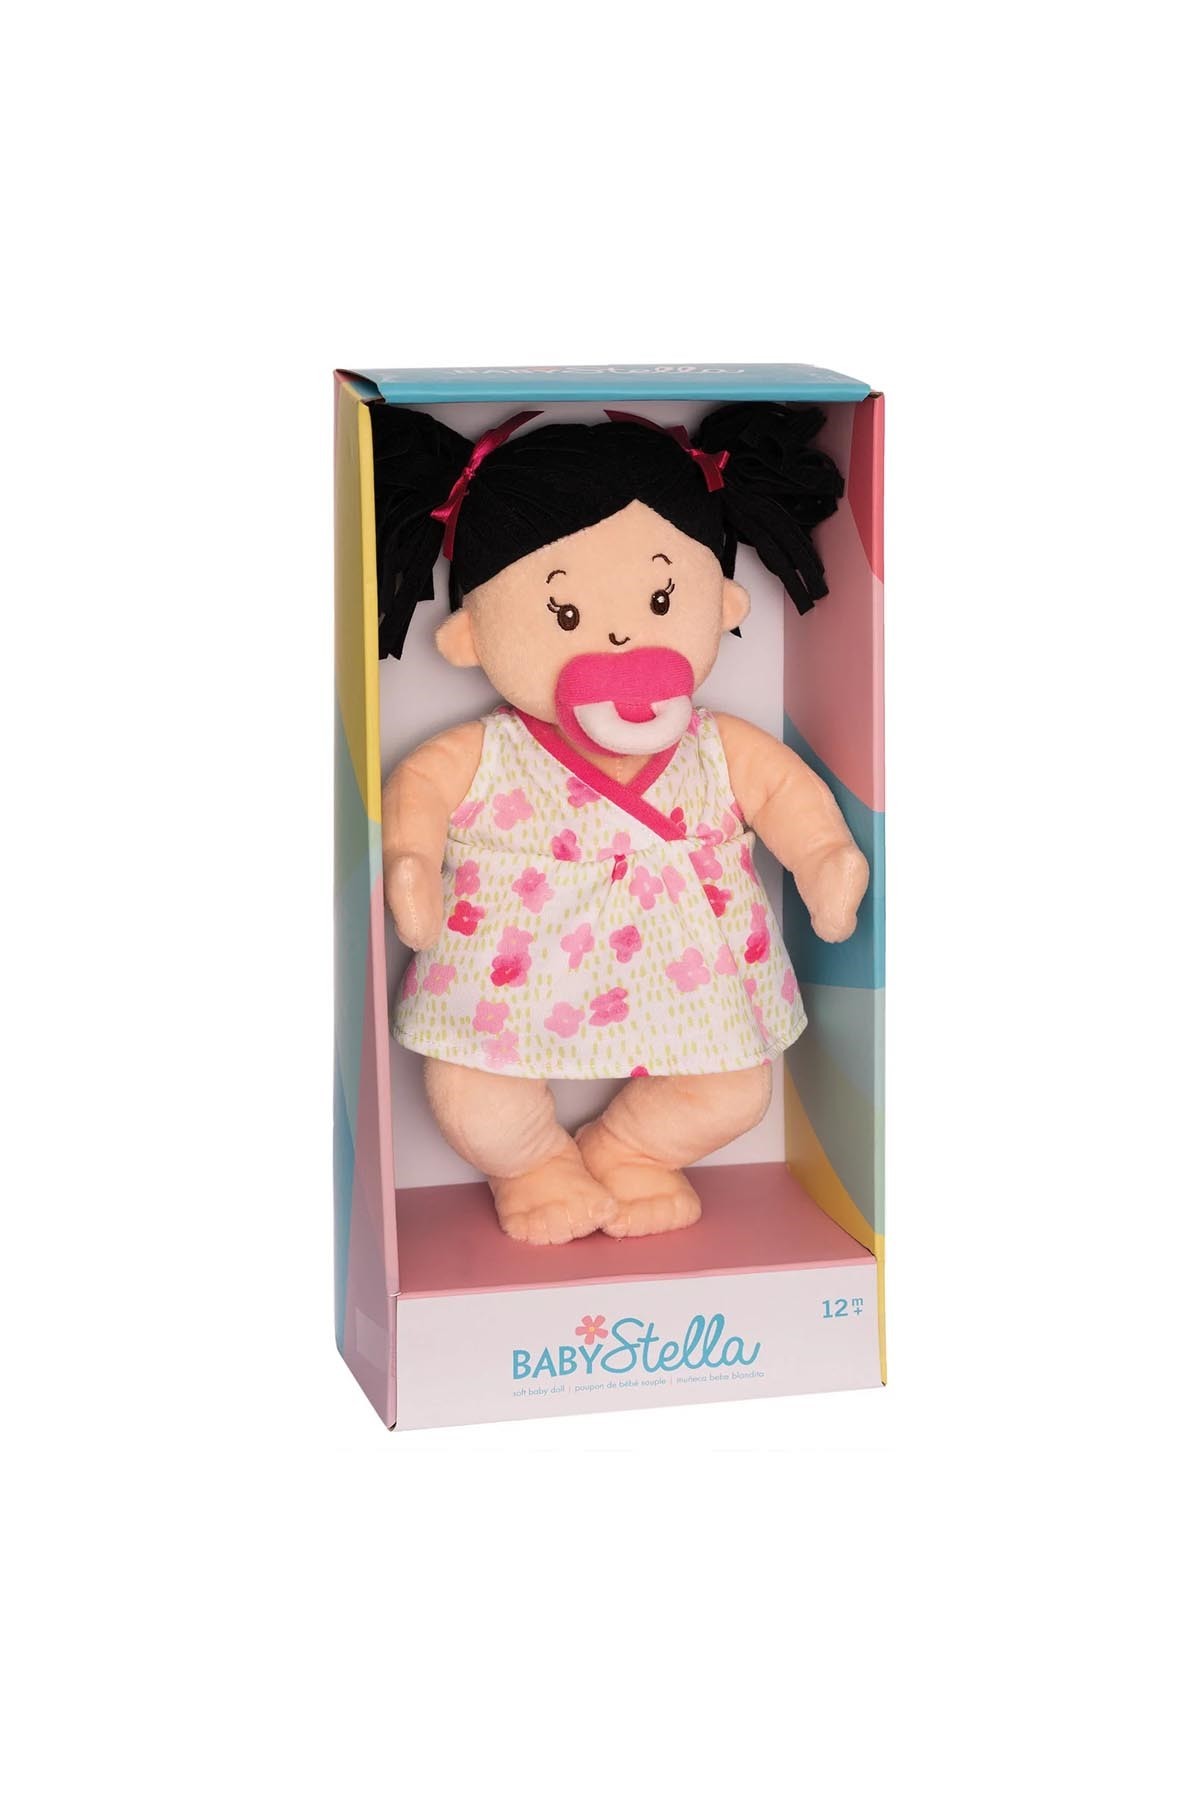 Manhattan Toy Baby Stella Oyuncak Bebek